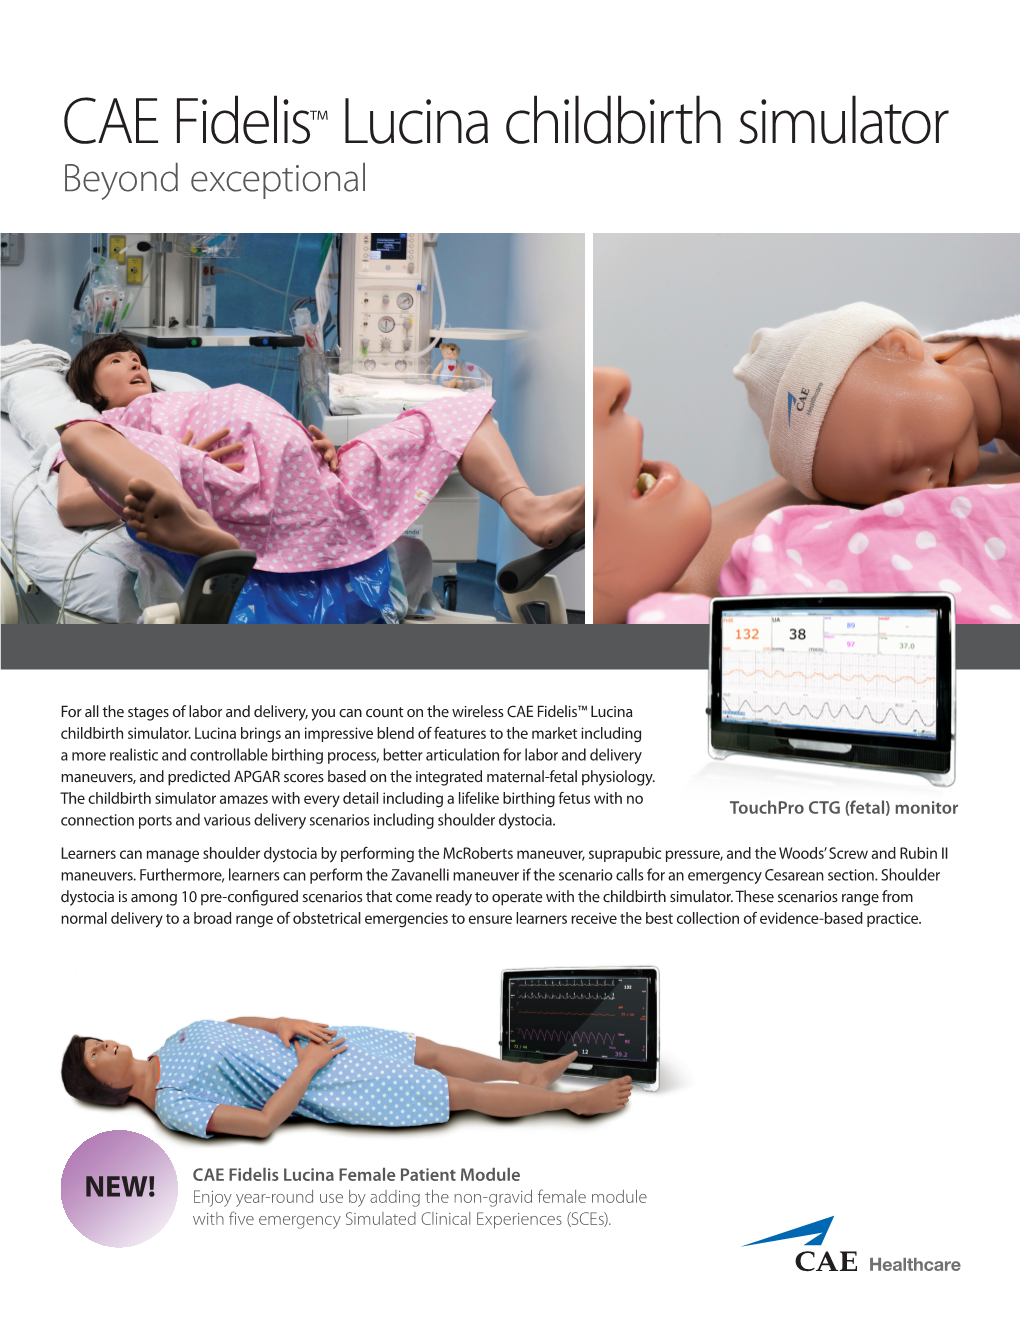 CAE Fidelis™ Lucina Childbirth Simulator Beyond Exceptional